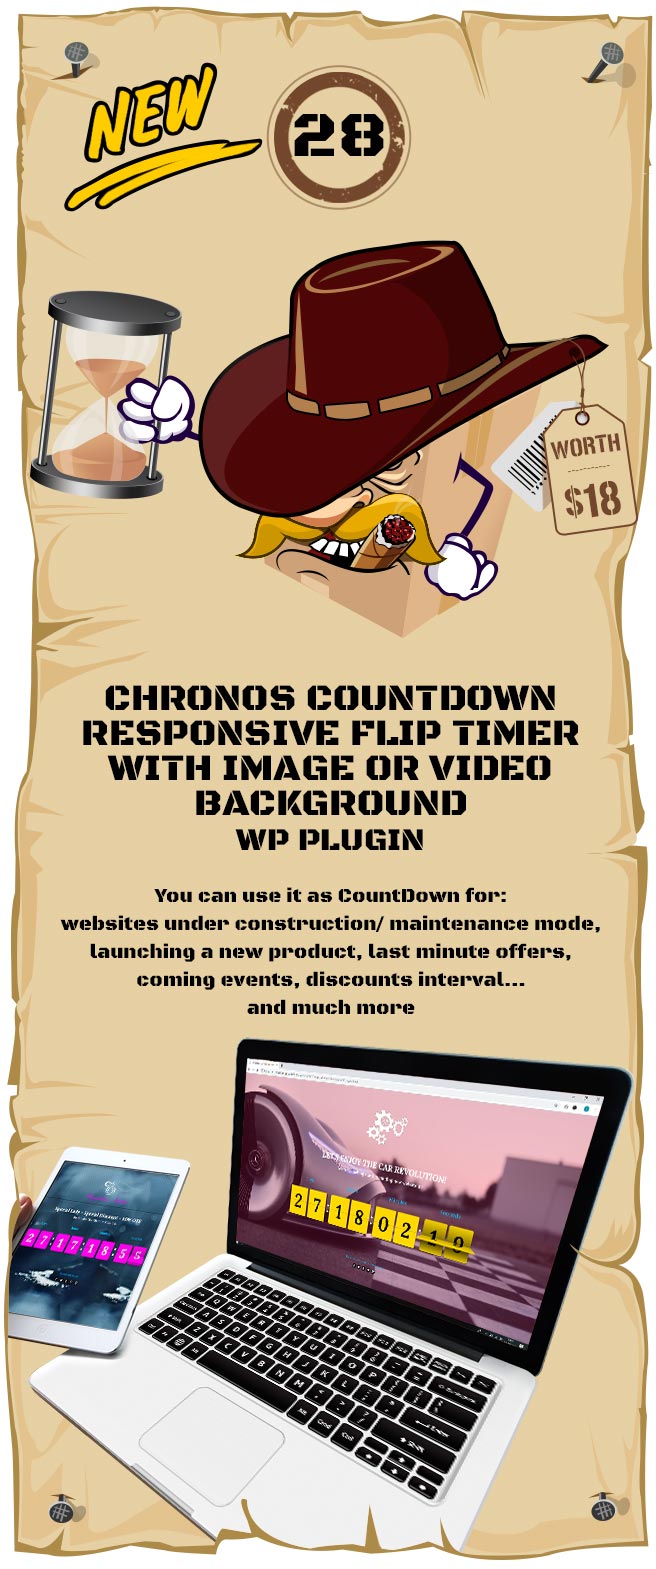 Chronos CountDown - Responsive Flip Timer With Image or Video Background - WordPress Plugin